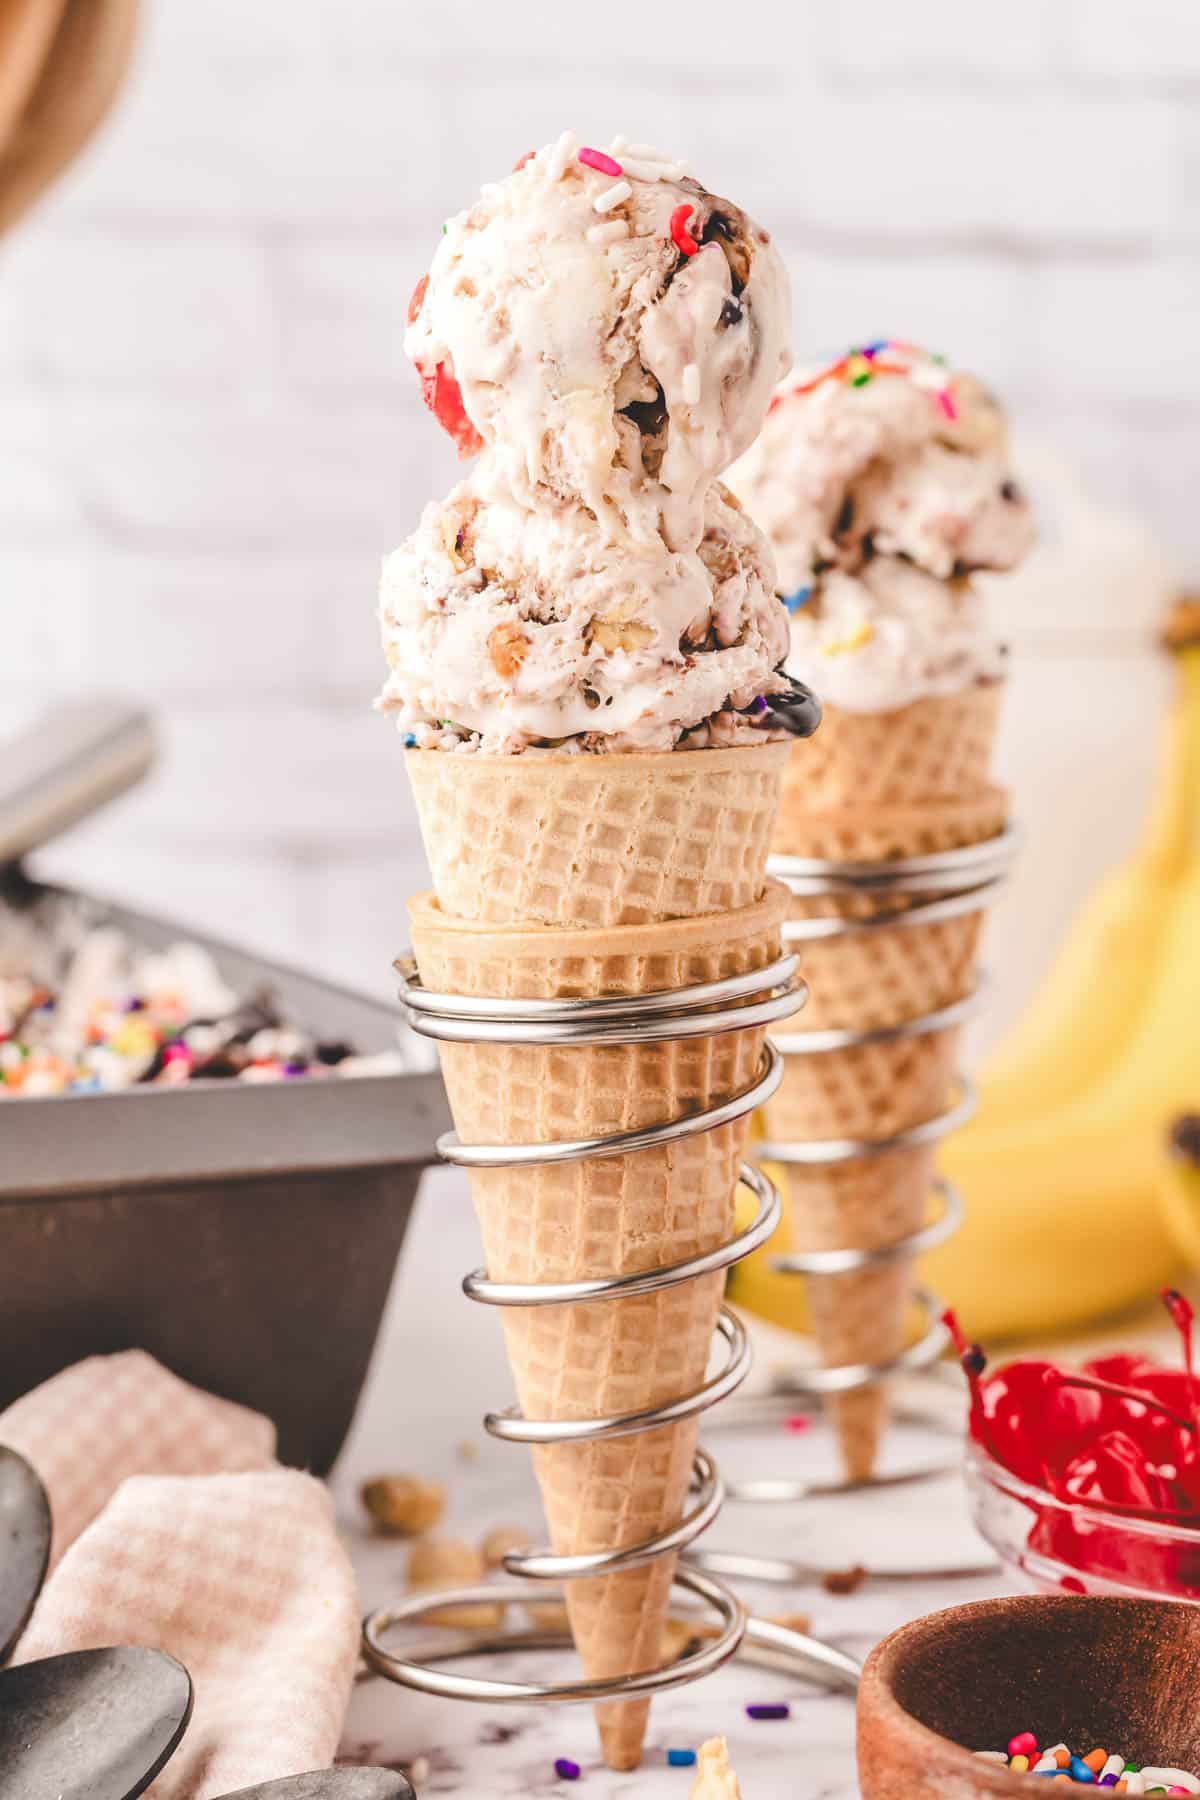 Ice cream cones filled with banana split ice cream in cone holders.